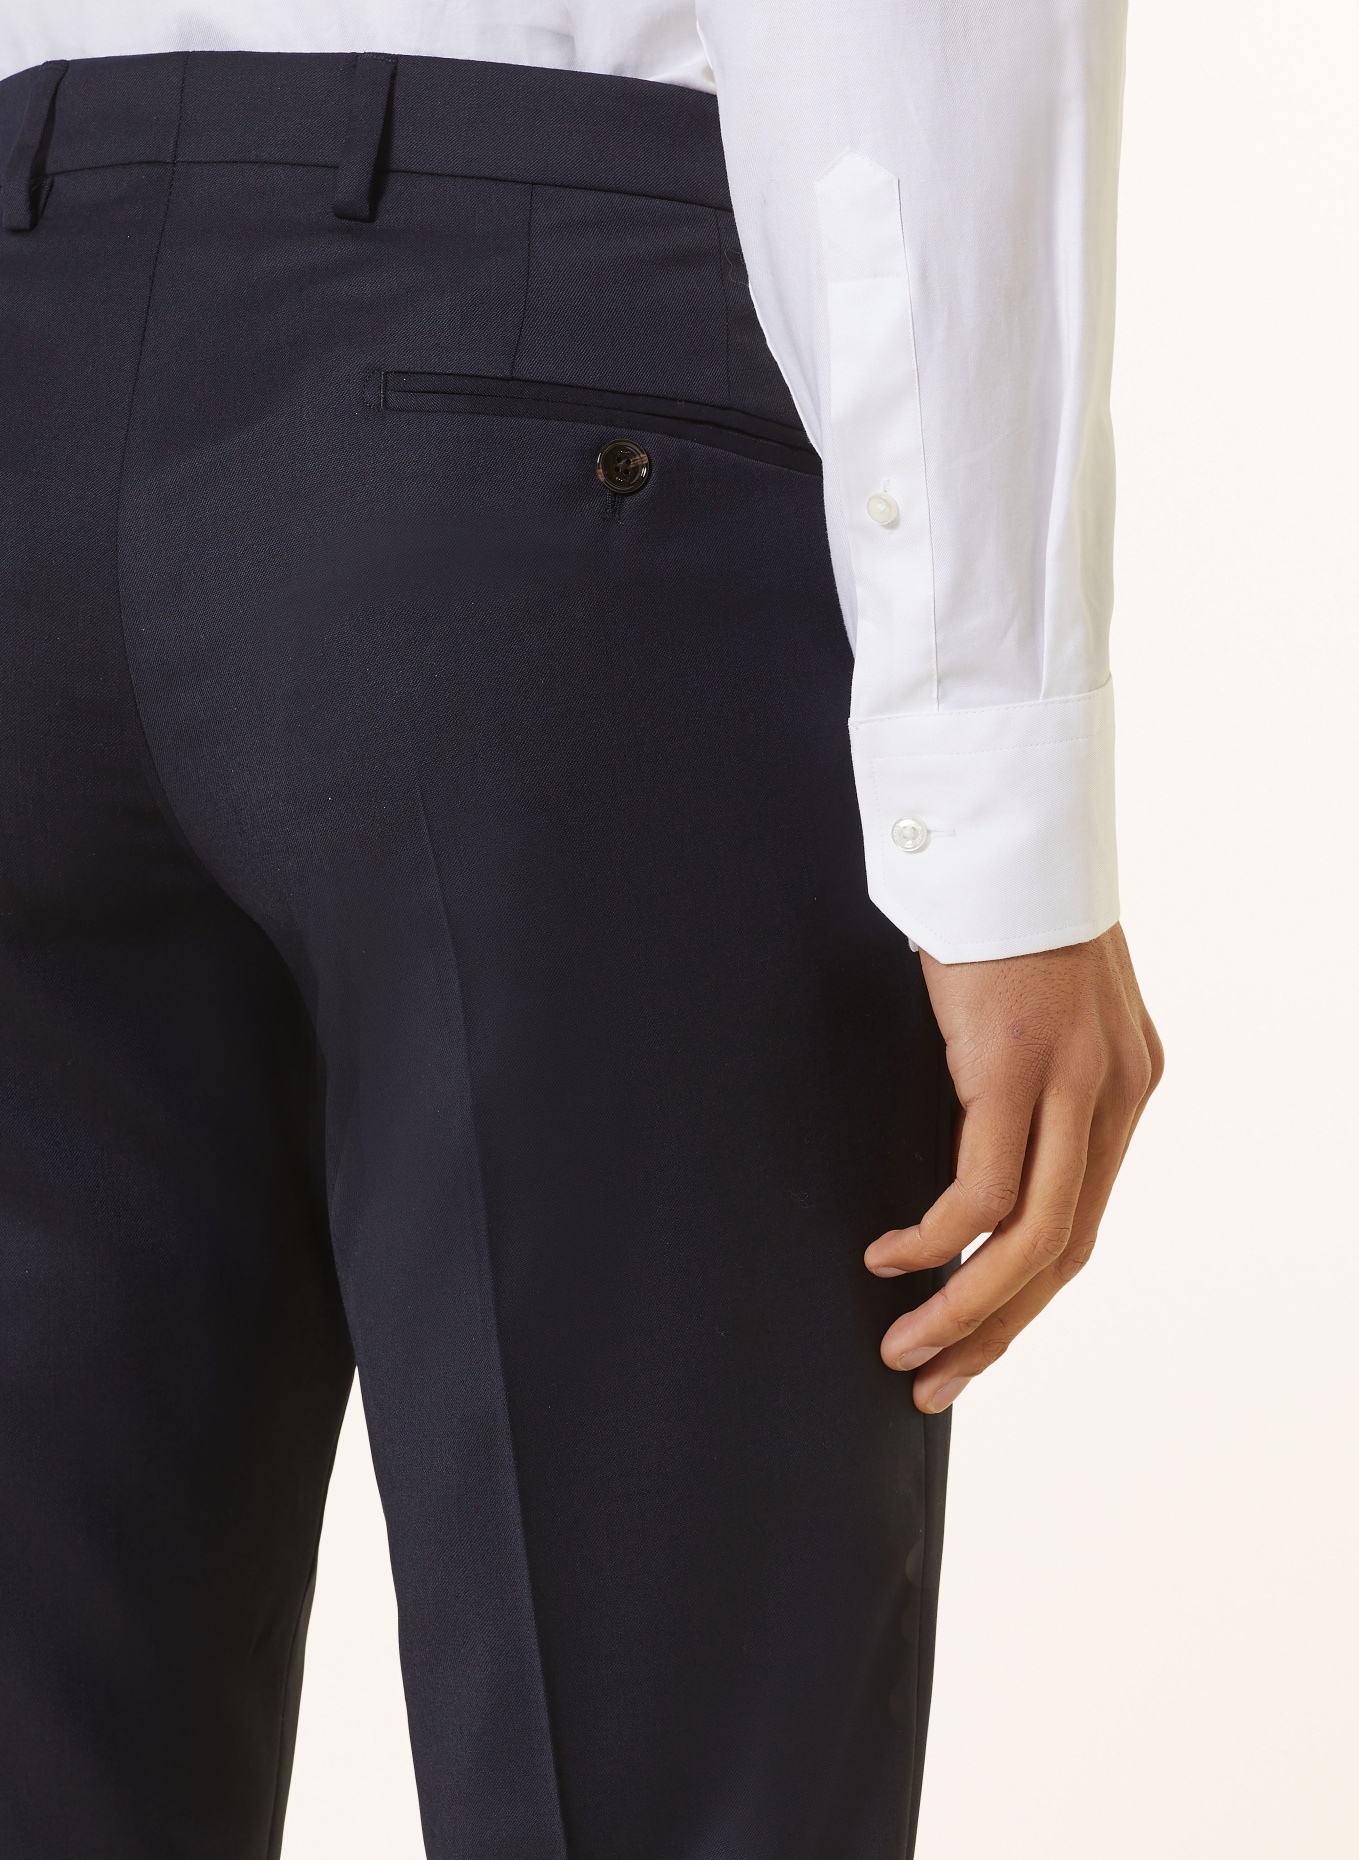 JOOP! Anzughose Slim Fit, Farbe: 401 Dark Blue                  401 (Bild 6)